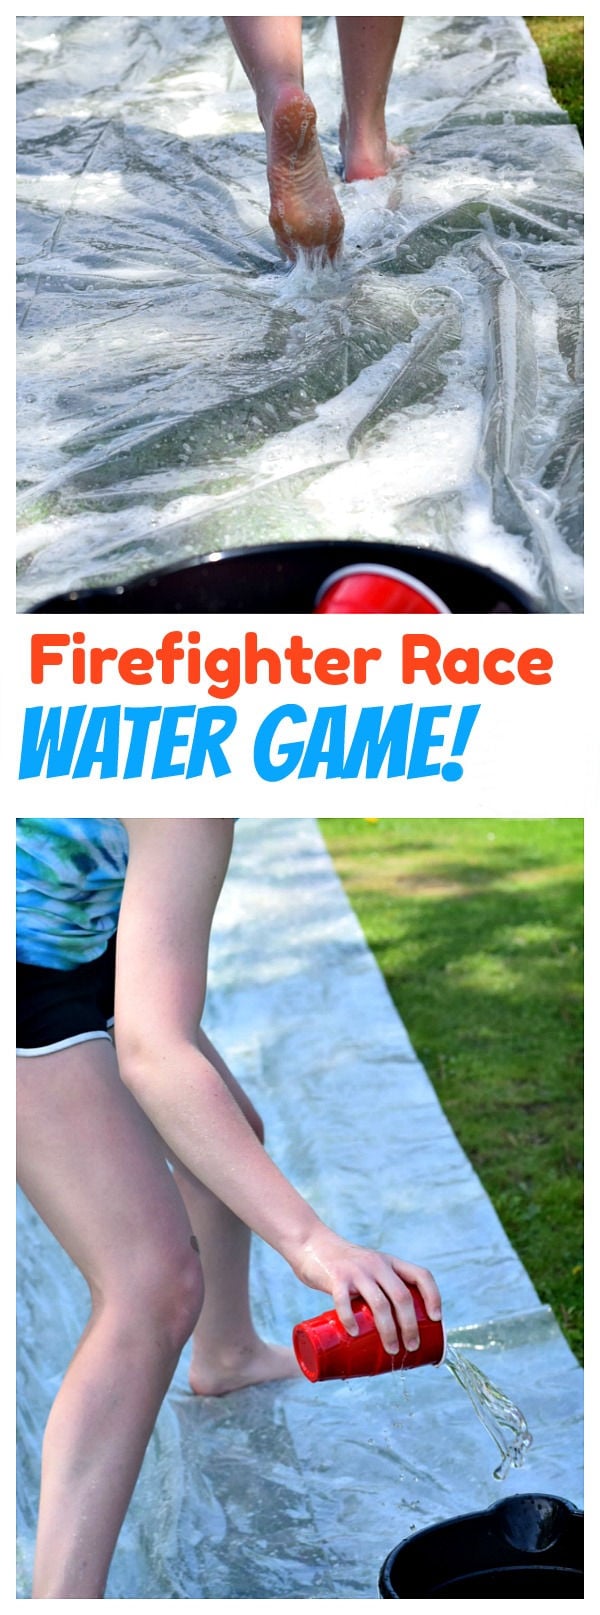 firefighter water relay race